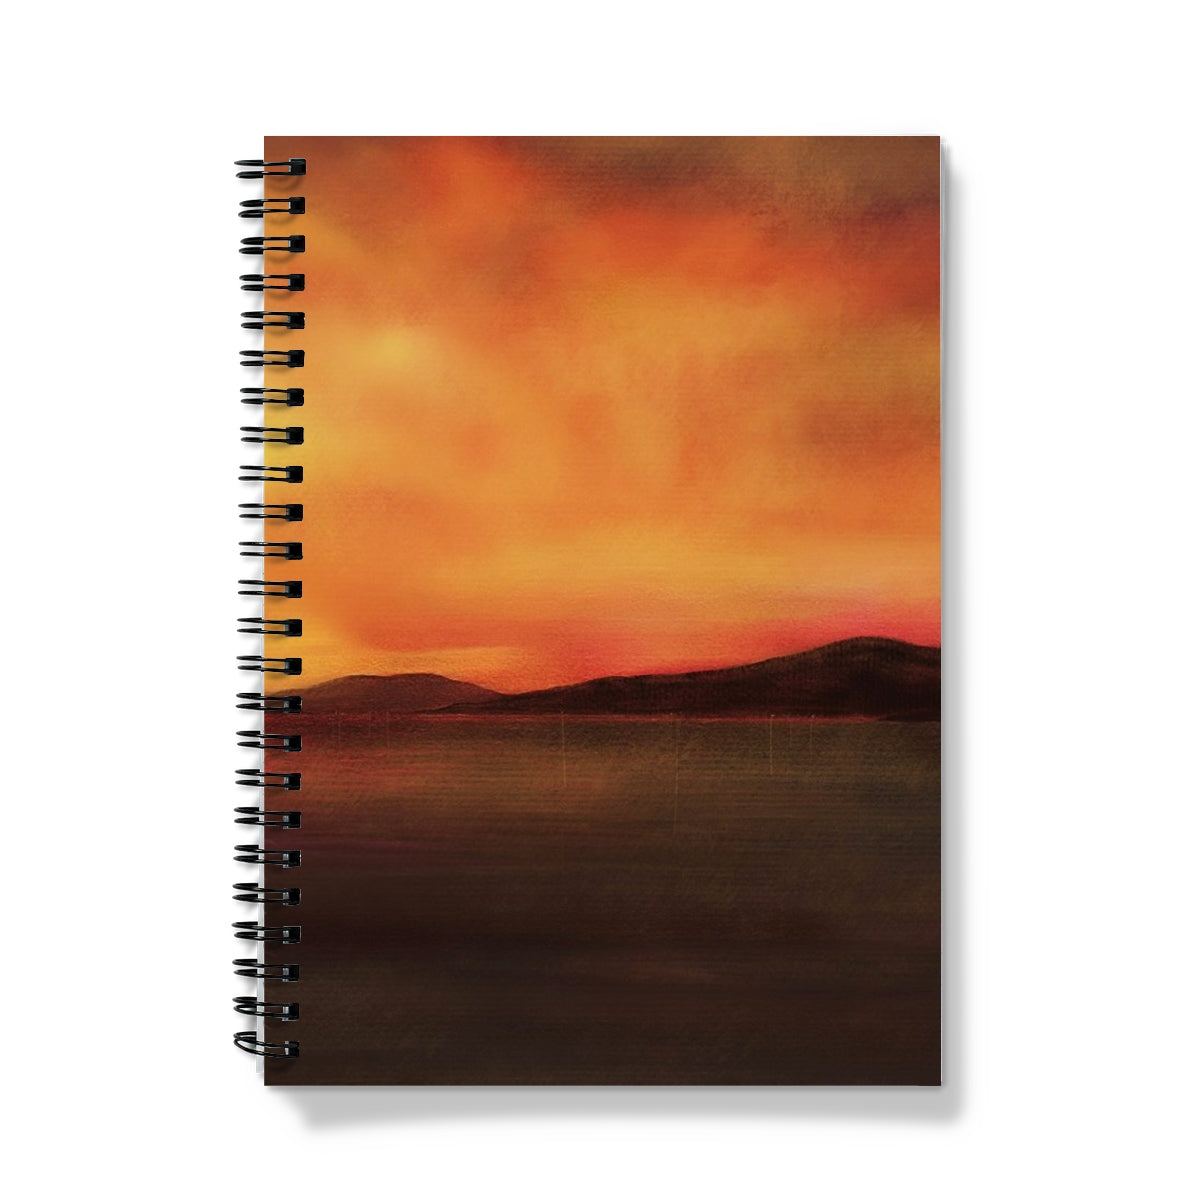 Harris Sunset Art Gifts Notebook-Journals & Notebooks-Hebridean Islands Art Gallery-A5-Graph-Paintings, Prints, Homeware, Art Gifts From Scotland By Scottish Artist Kevin Hunter